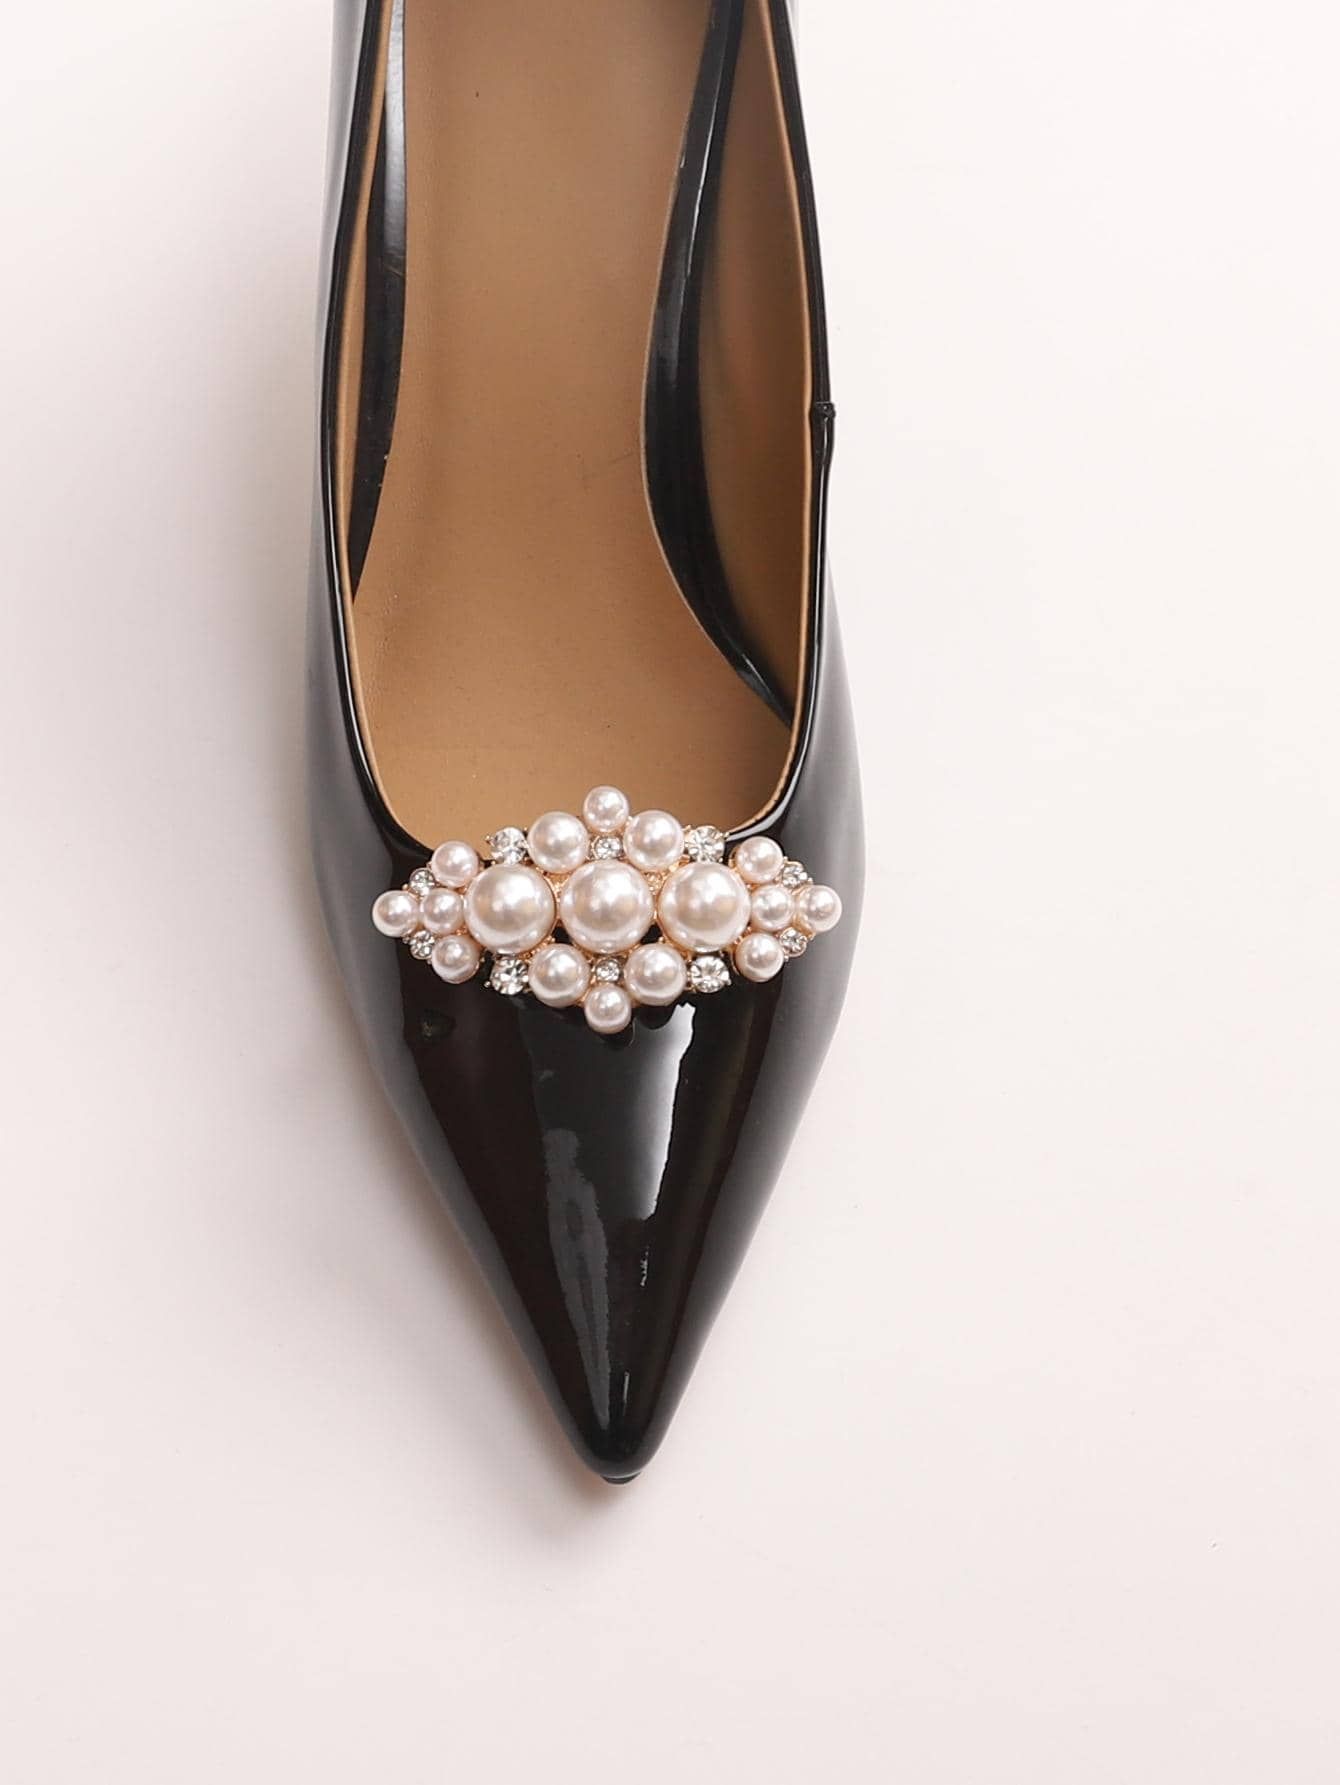 1pc Rhinestone & Faux Pearl Decor Shoe Decoration | SHEIN